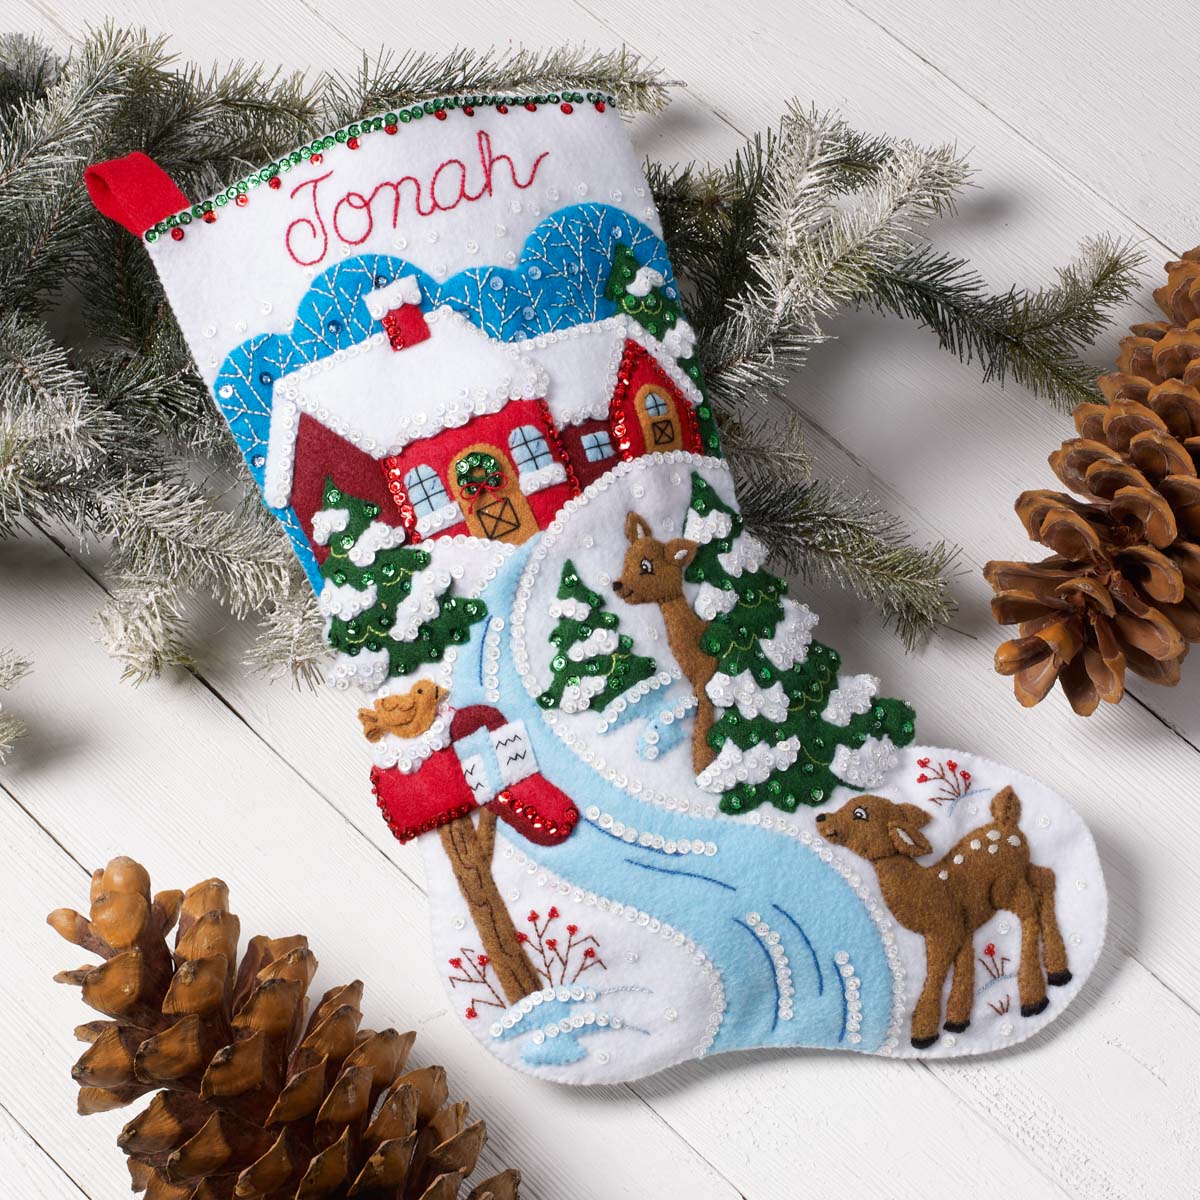 Bucilla ® Seasonal - Felt - Stocking Kits - Winter Days - 89464E